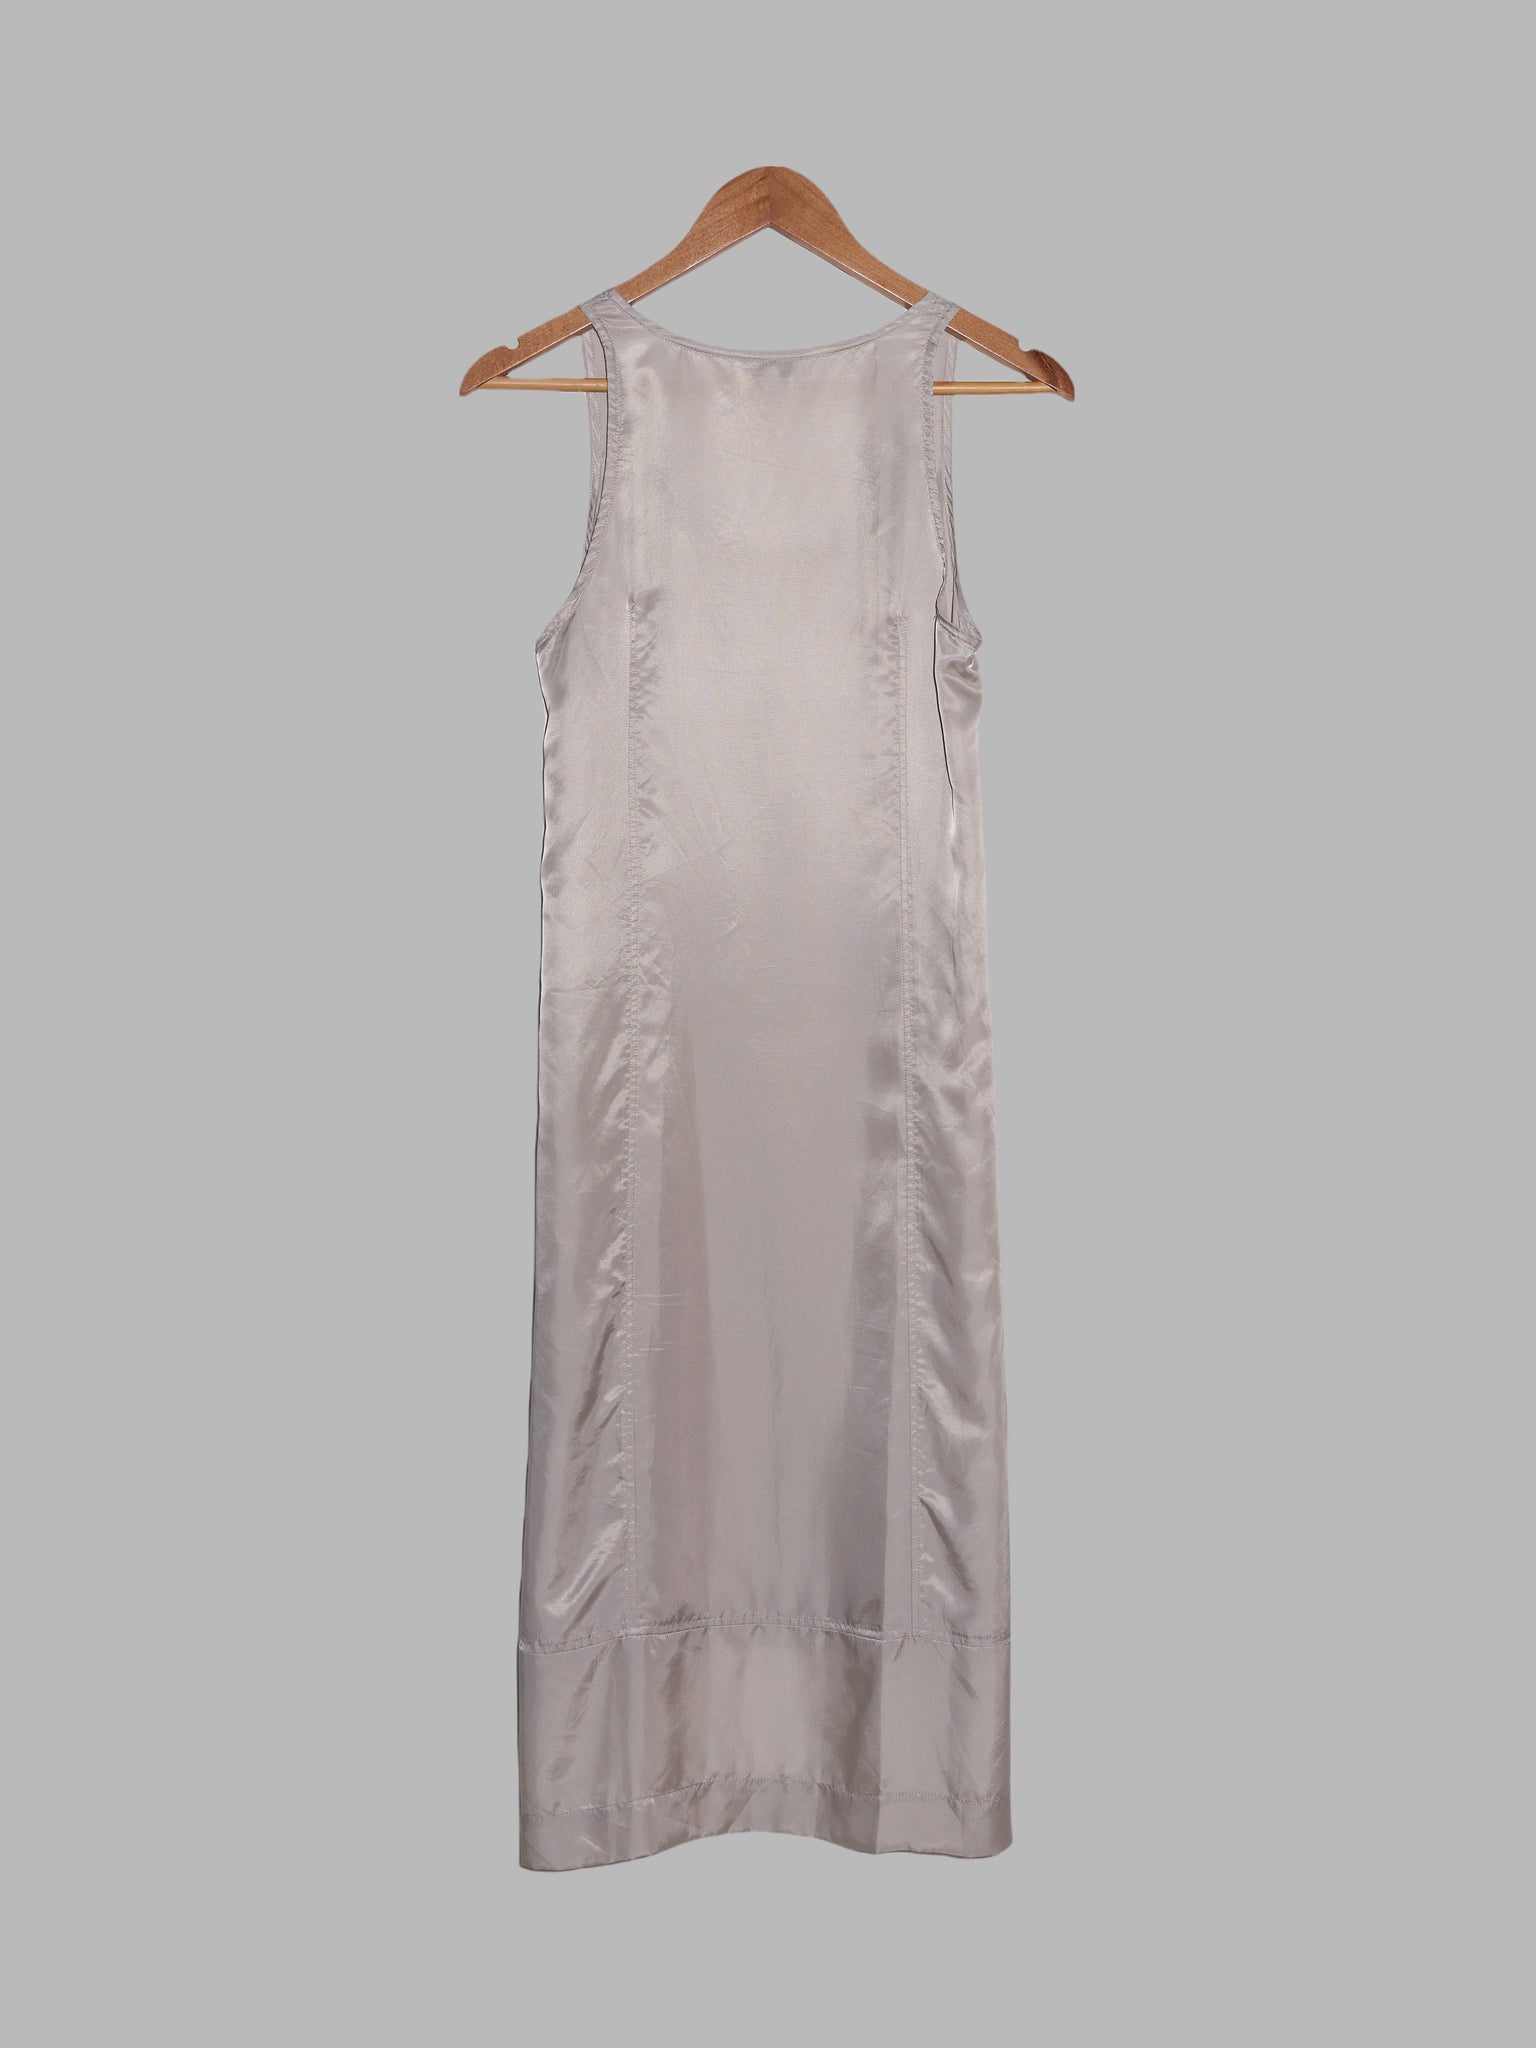 Dries van Noten grey cupra satin sleeveless slip dress - size 36